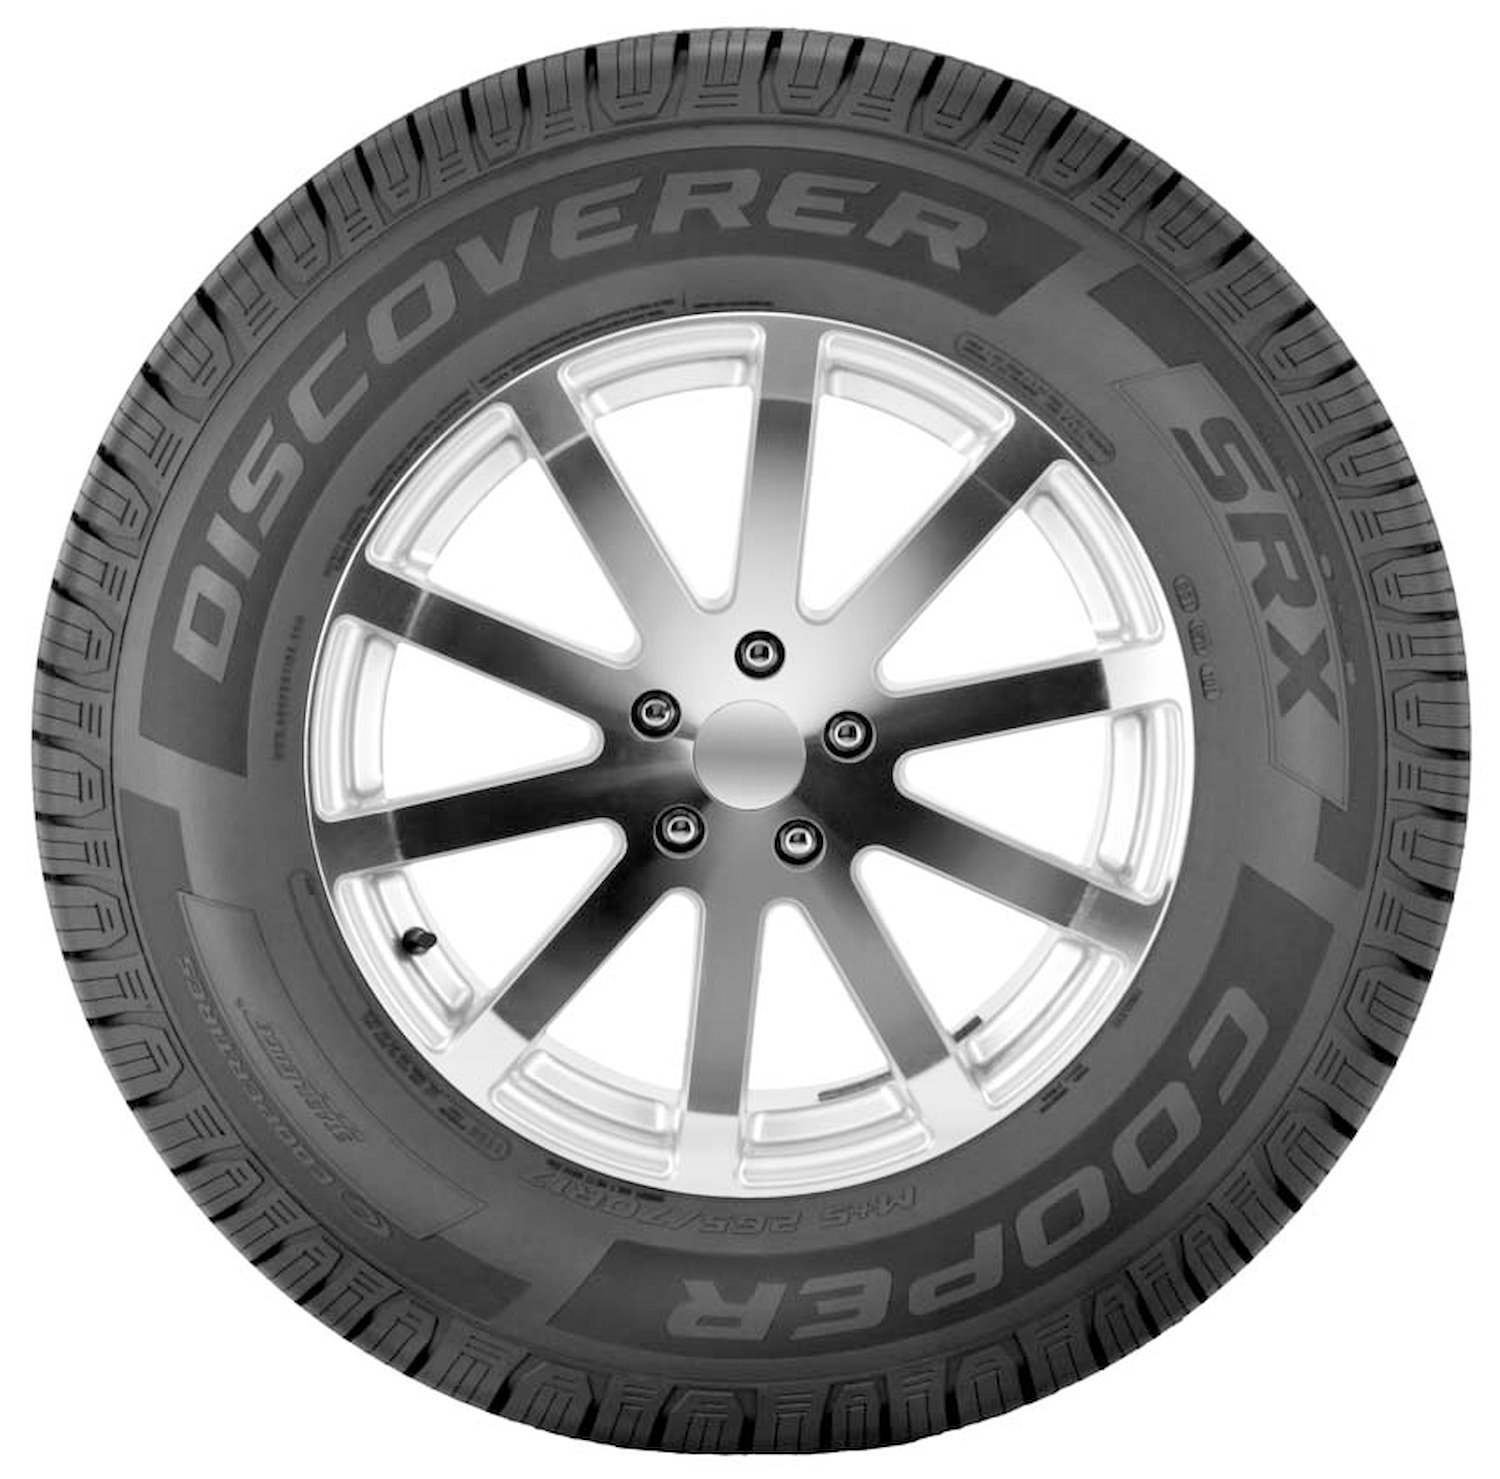 Discoverer SRX Commuter/Touring Tire, 235/70R16